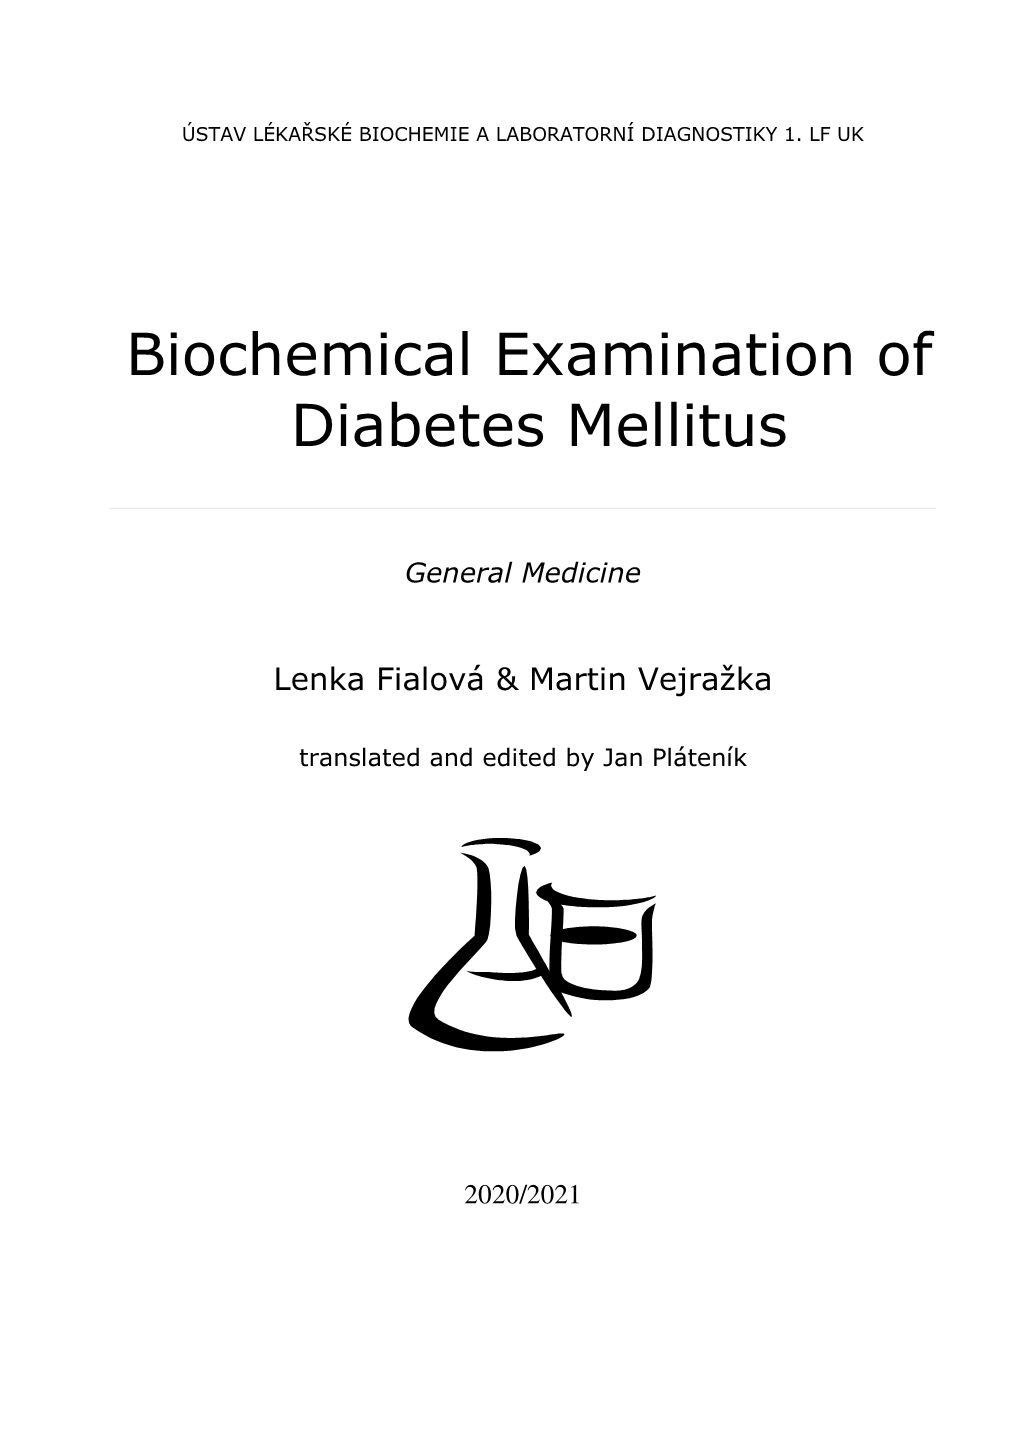 Biochemical Examination of Diabetes Mellitus